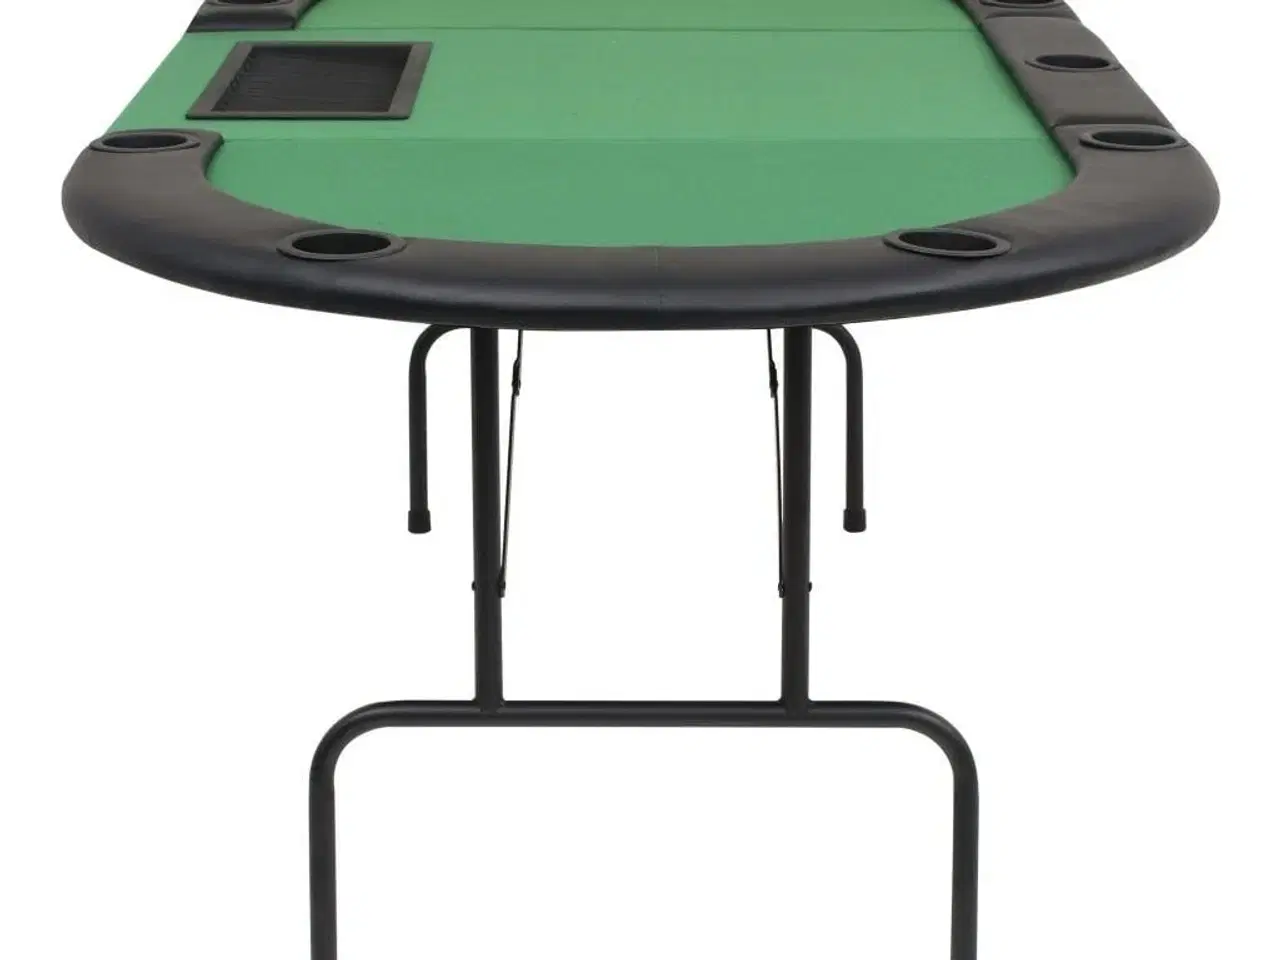 Billede 4 - Foldbart pokerbord til 9 spillere 3-fold oval grøn